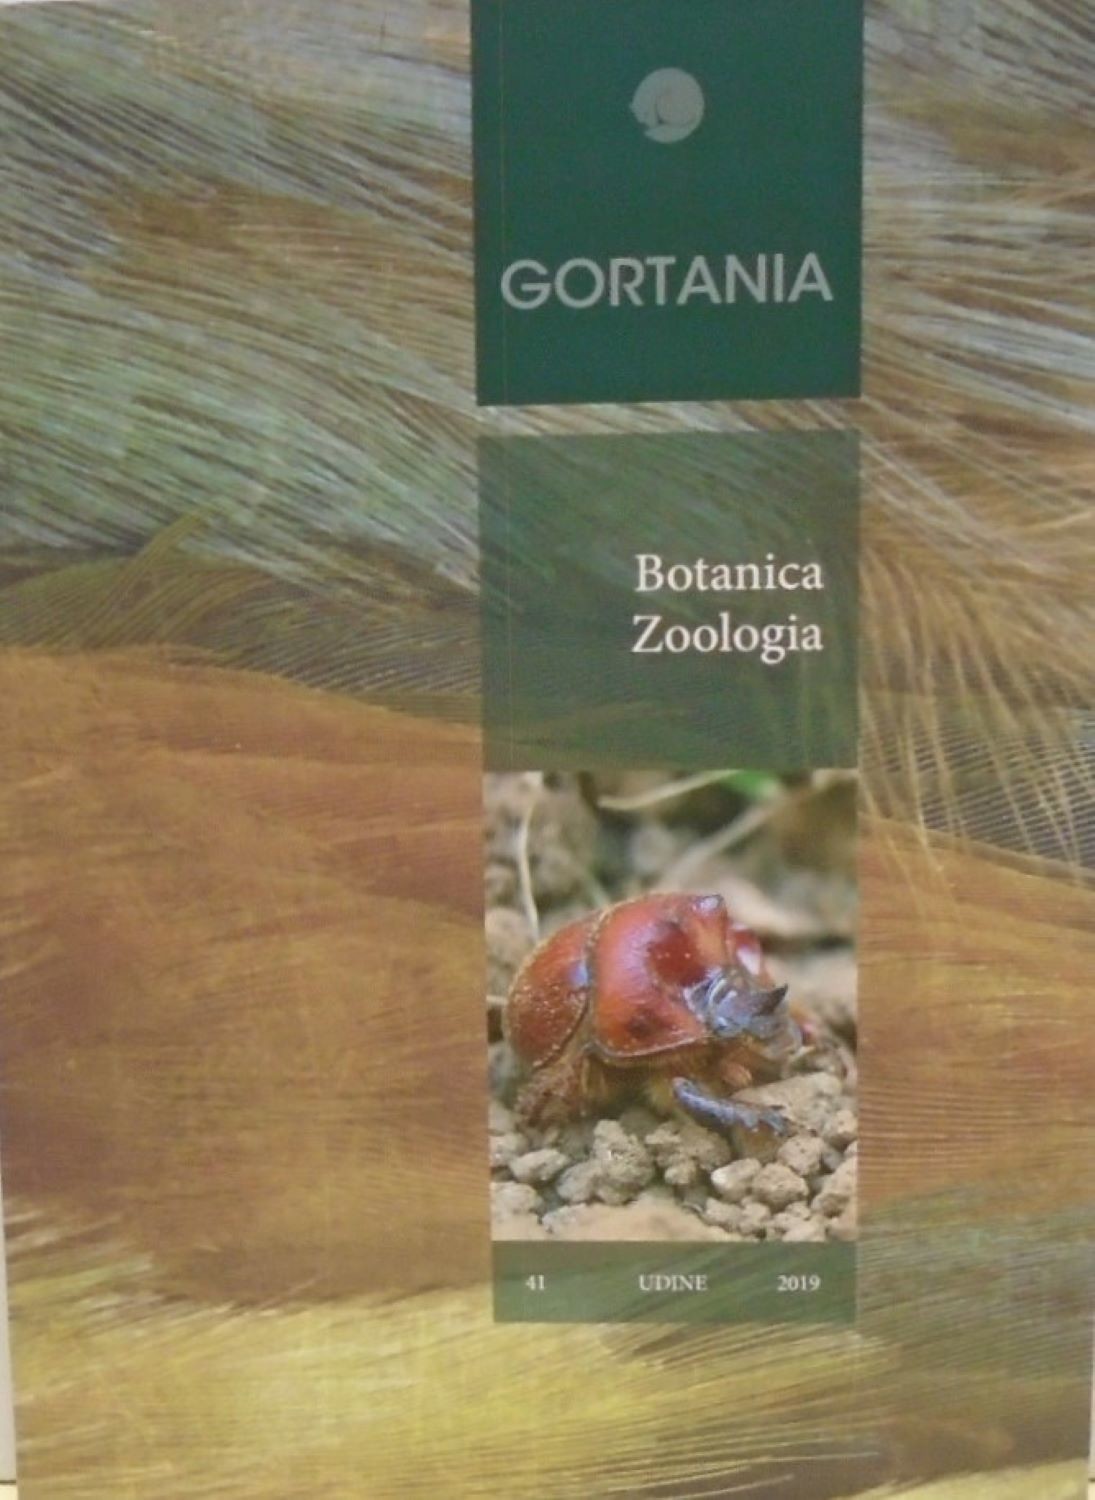 Gortania. Atti del Museo Friulano di Storia Naturale. Botanica, Zoologia 2019/41. (Rippl-Rónai Múzeum CC BY-NC-ND)